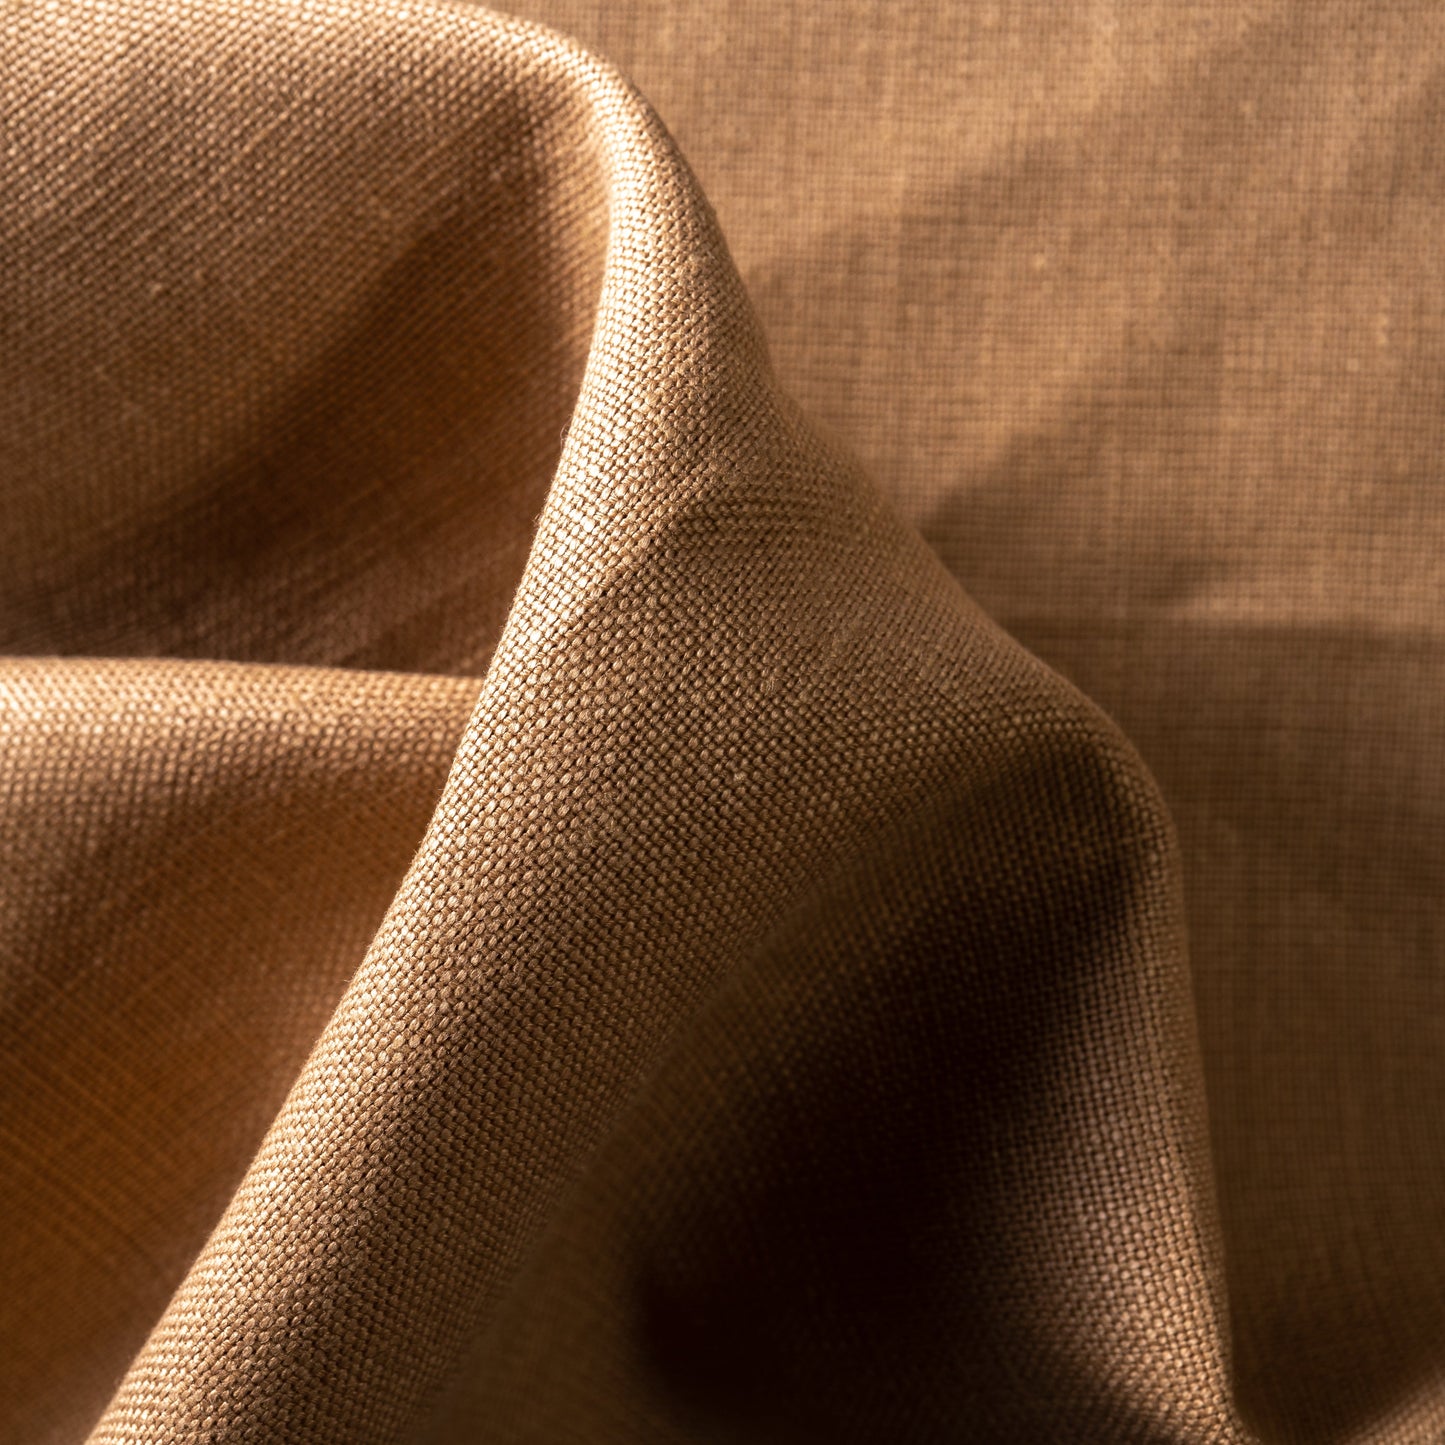 12 oz/sq yard 100% Upholstery/ Slipcover Weight Linen in Hazelnut